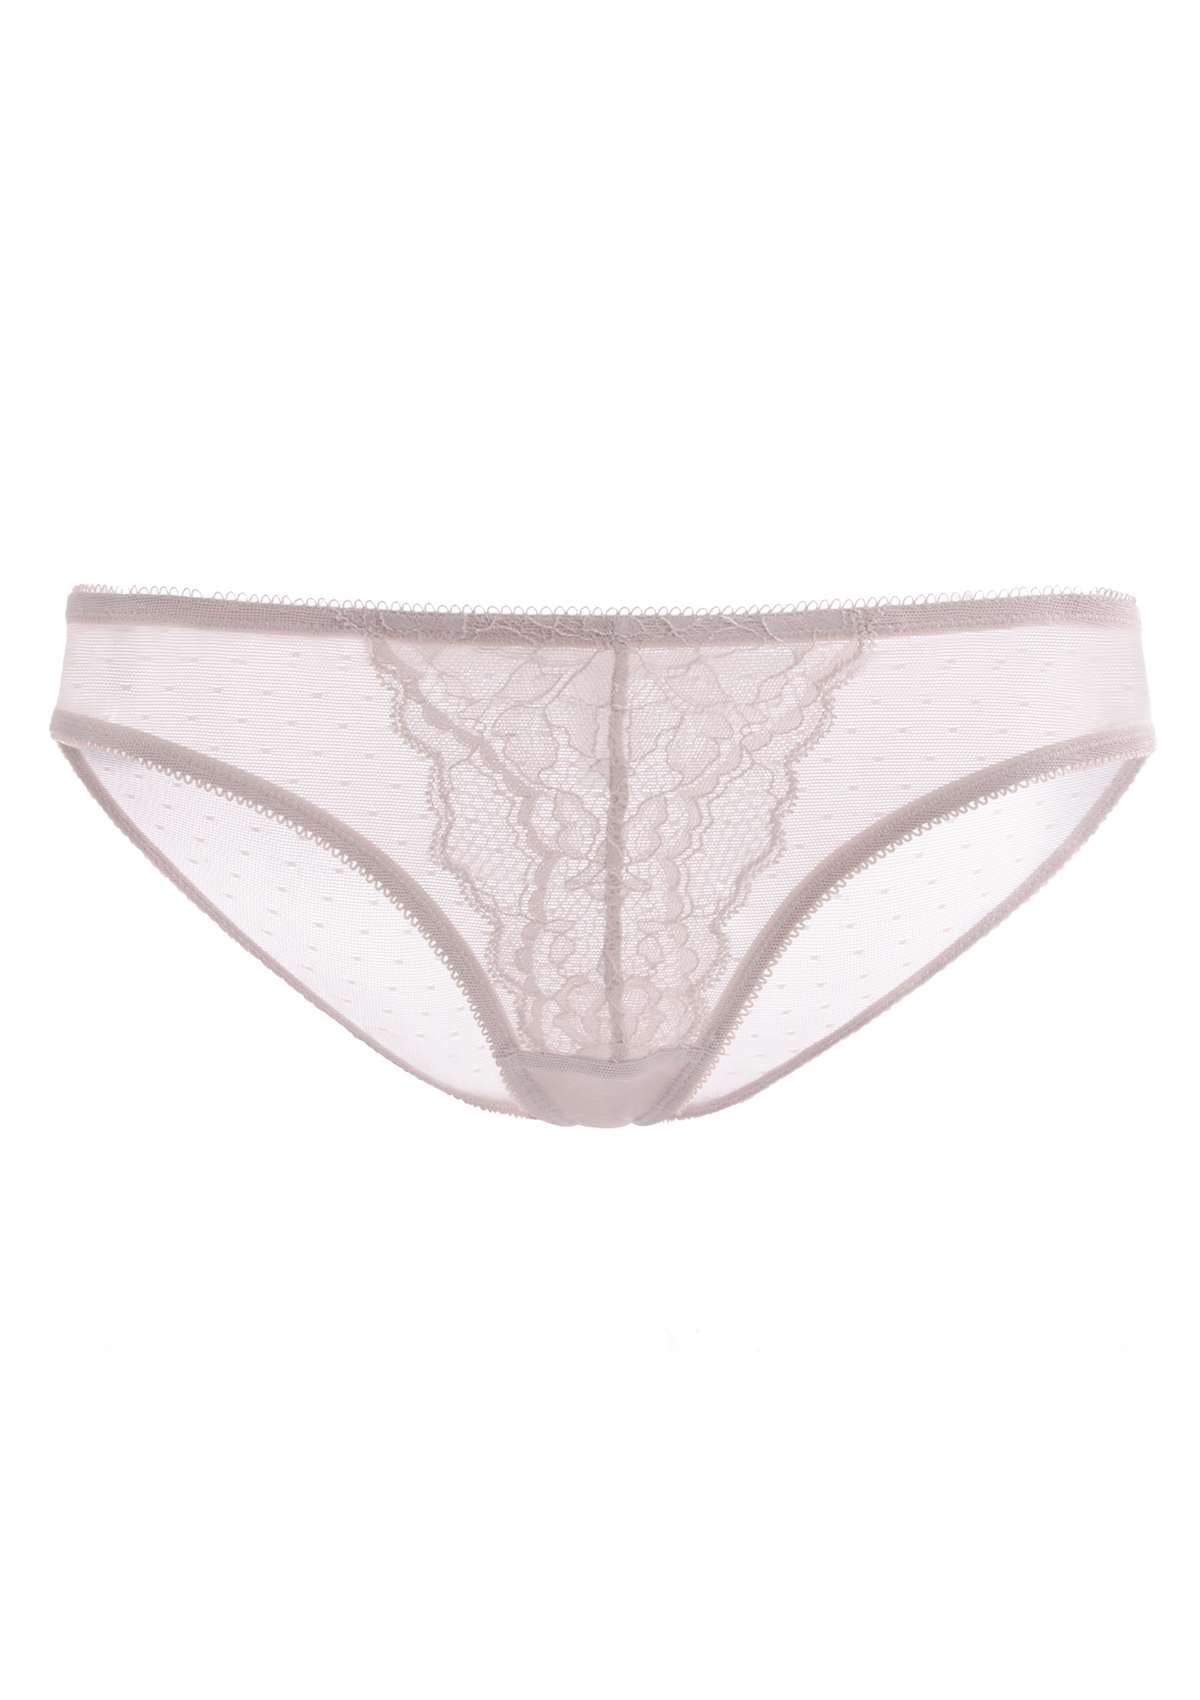 HSIA Enchante Sheer Lace Mesh Mid Rise Bikini Underwear - XXXL / White